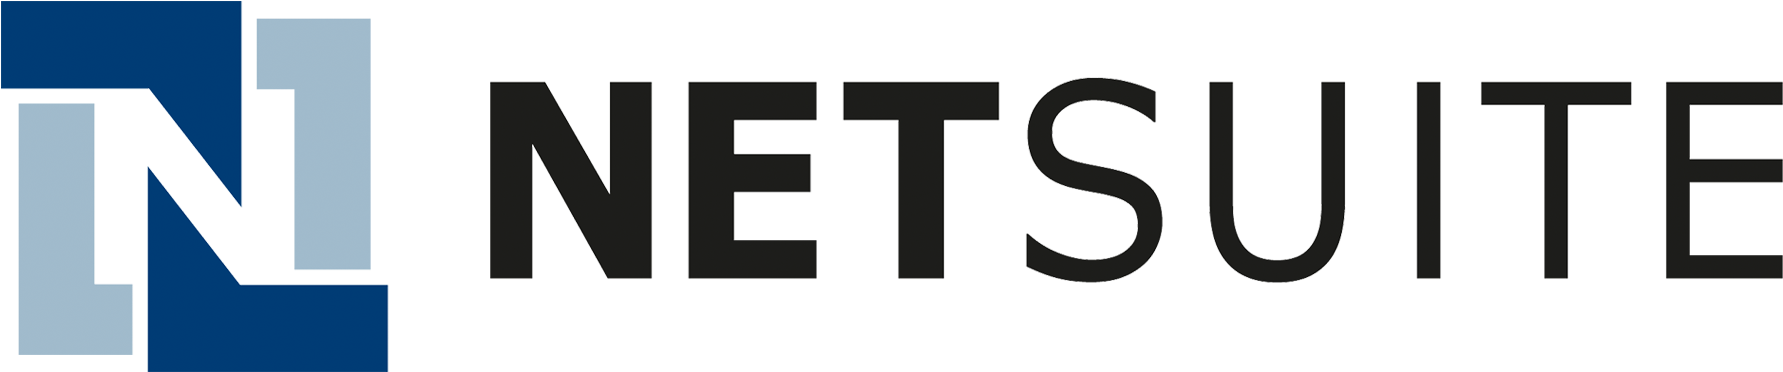 Netsuite Logo Hi Res - Logo Netsuite Clipart (1920x900), Png Download